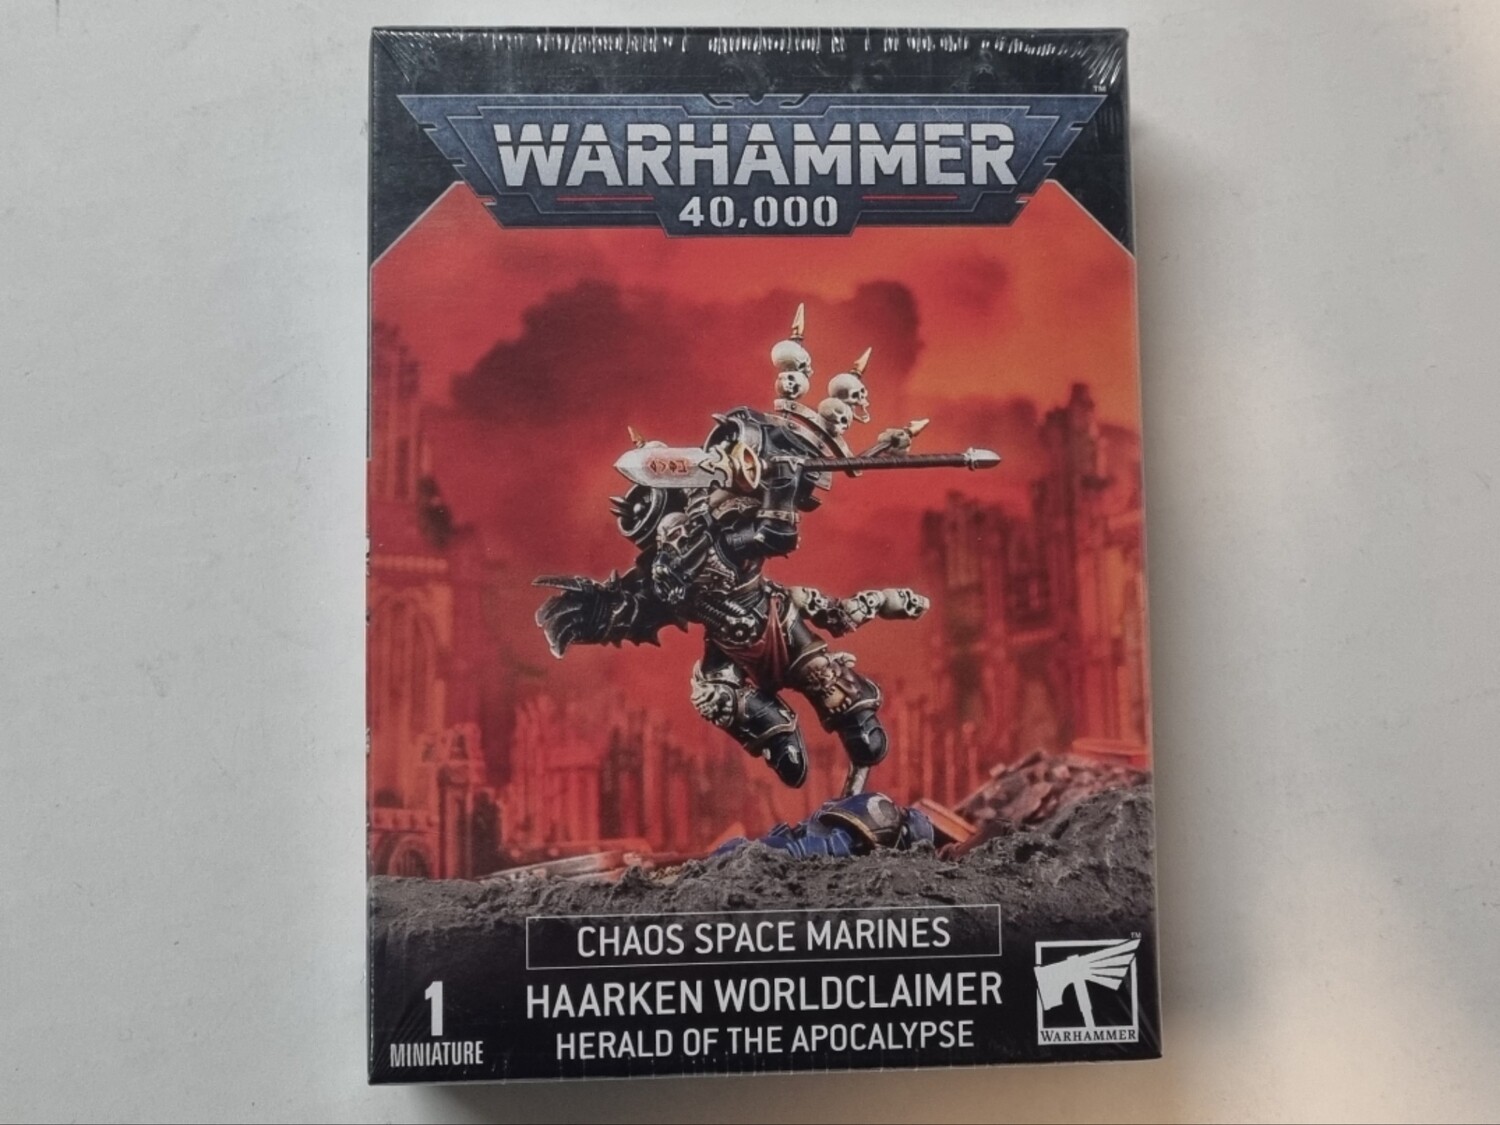 Warhammer 40k, Chaos Space Marines: Haarken Worldclaimer, Herald of the Apocalypse